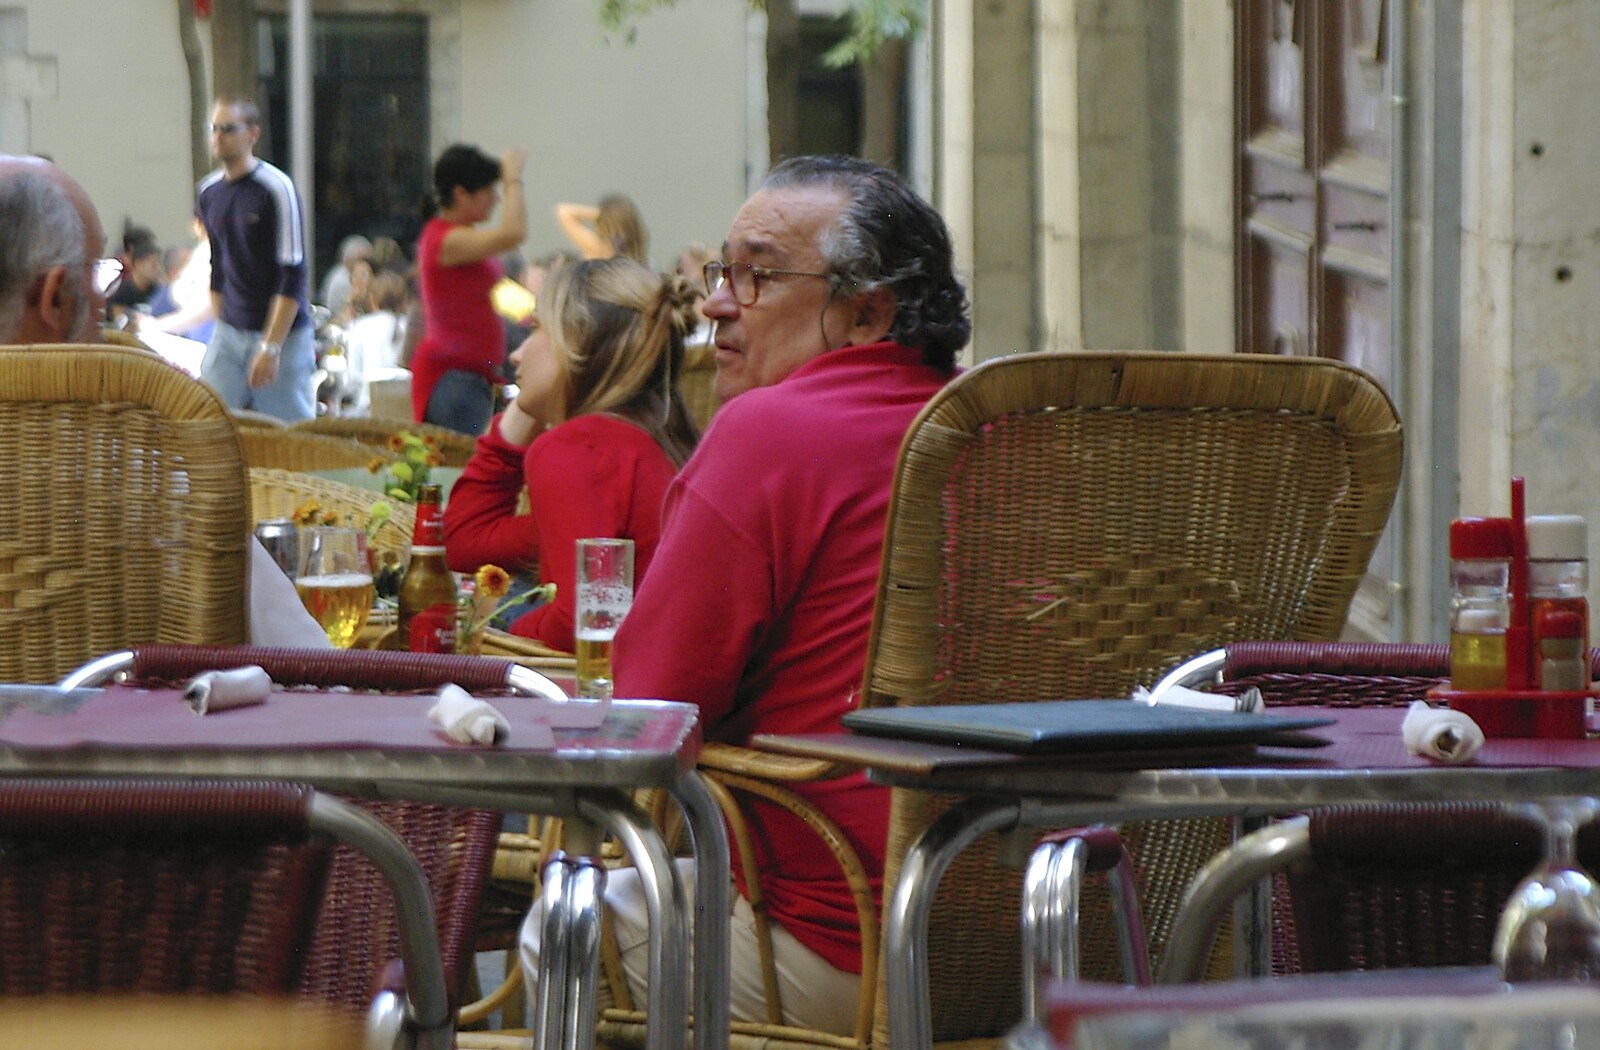 Bloke at a café from Girona, Catalunya, Spain - 17th September 2006